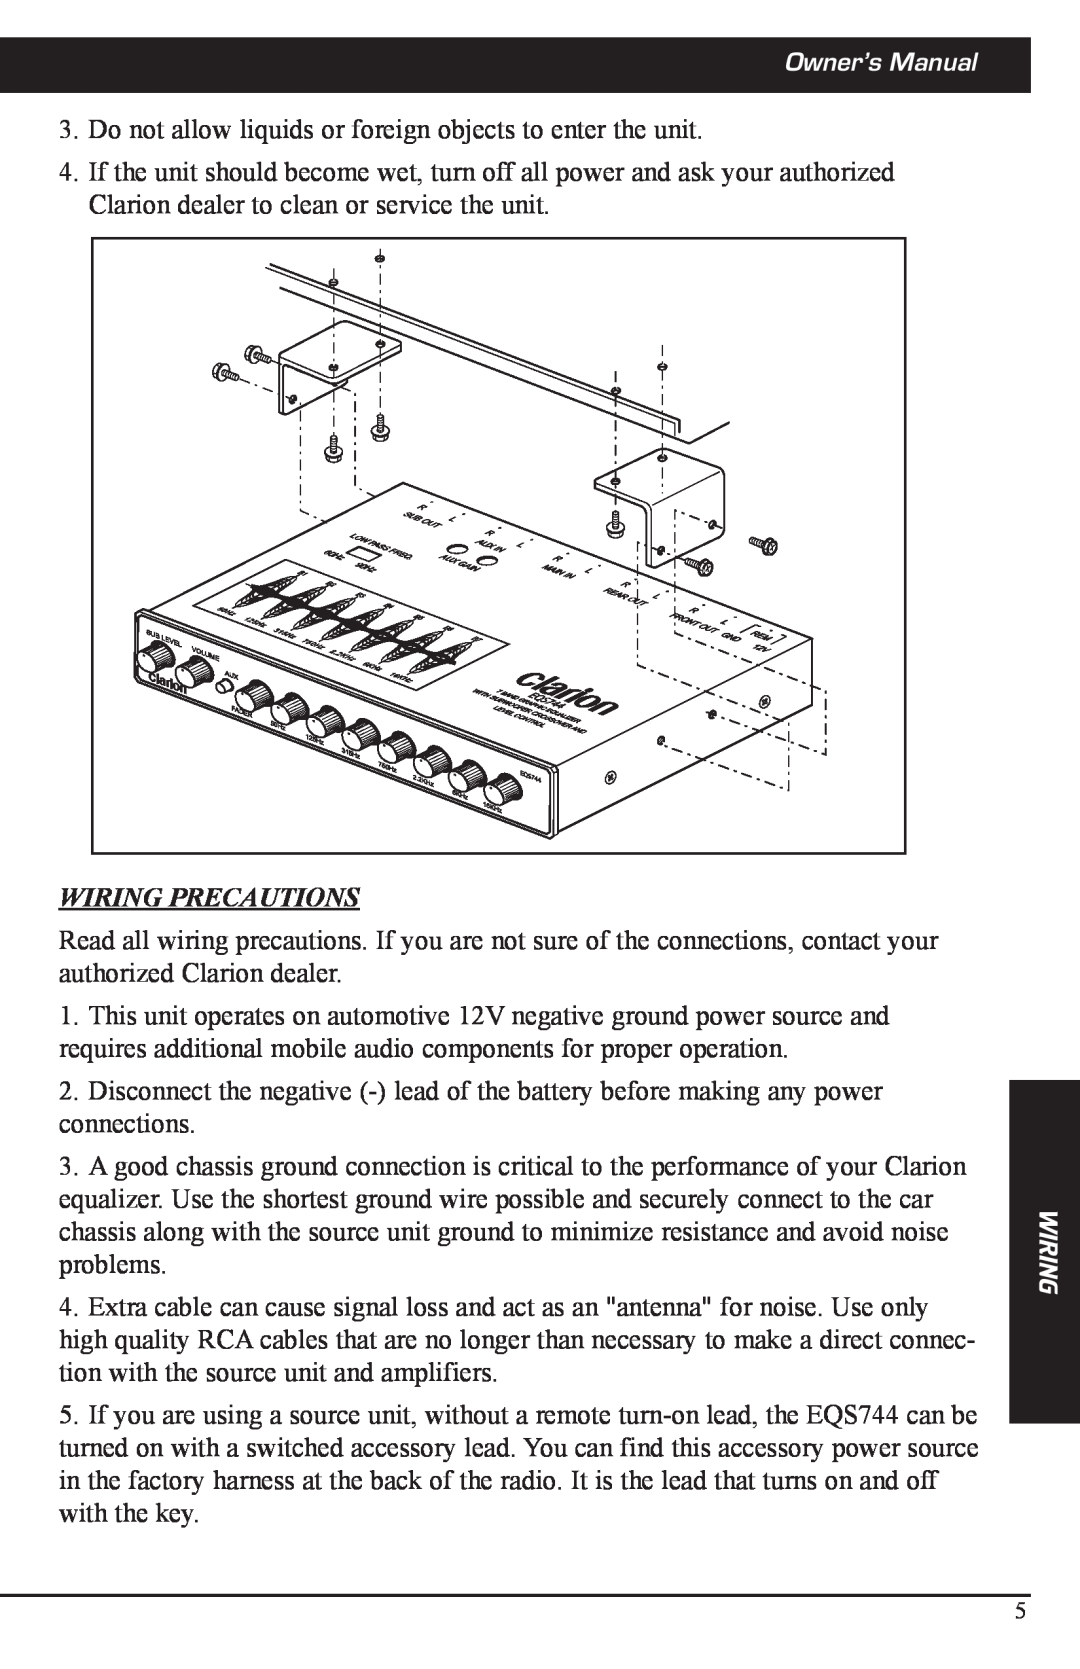 Clarion EQS744 manual Wiring Precautions 